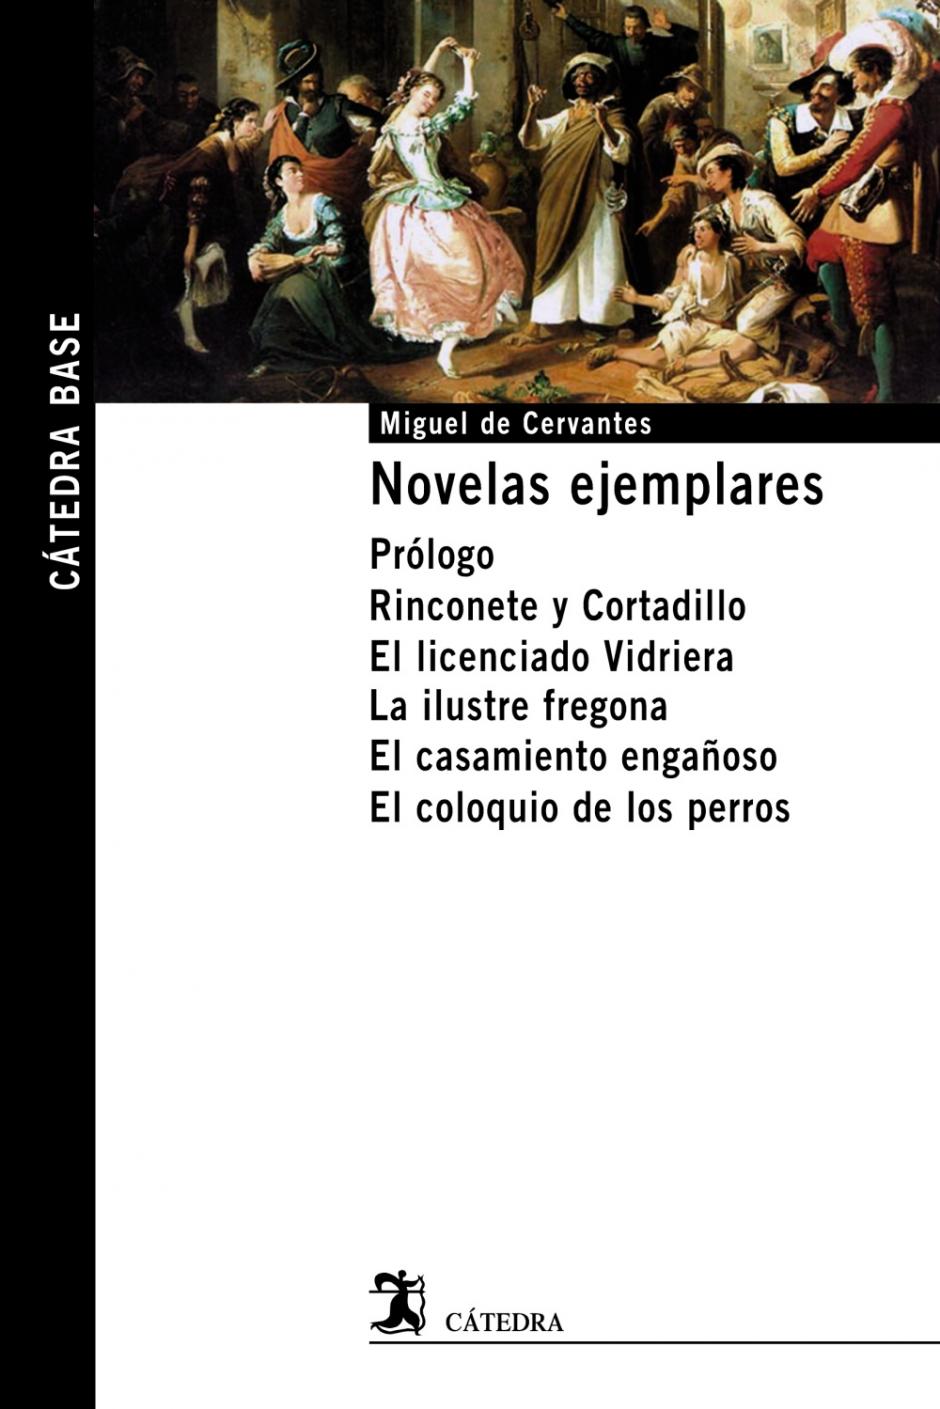 «Novelas ejemplares» de Miguel de Cervantes